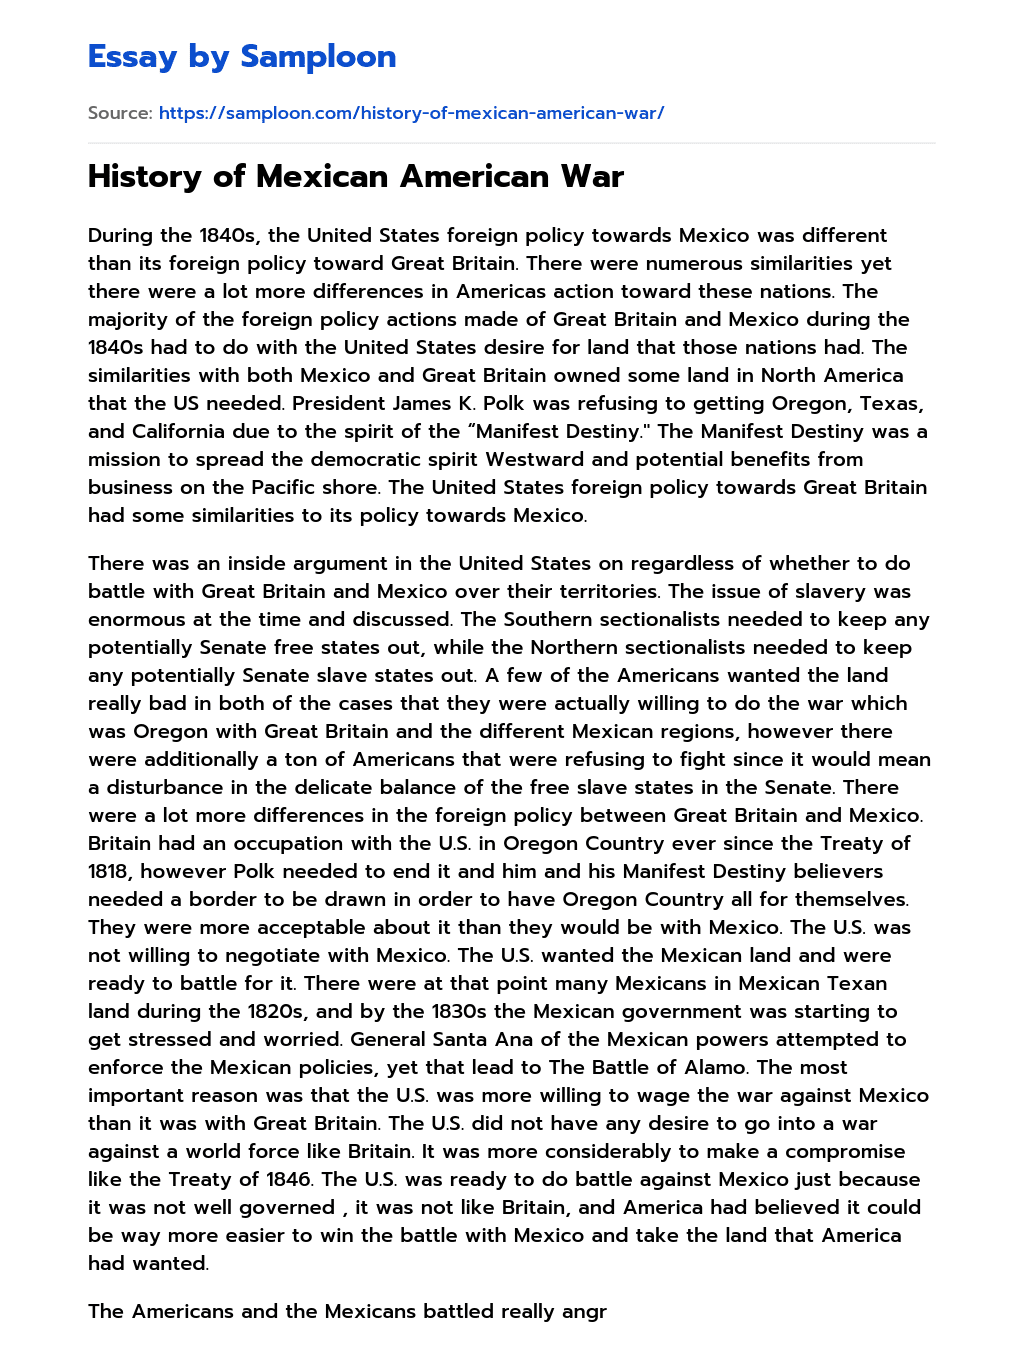 History of Mexican American War essay